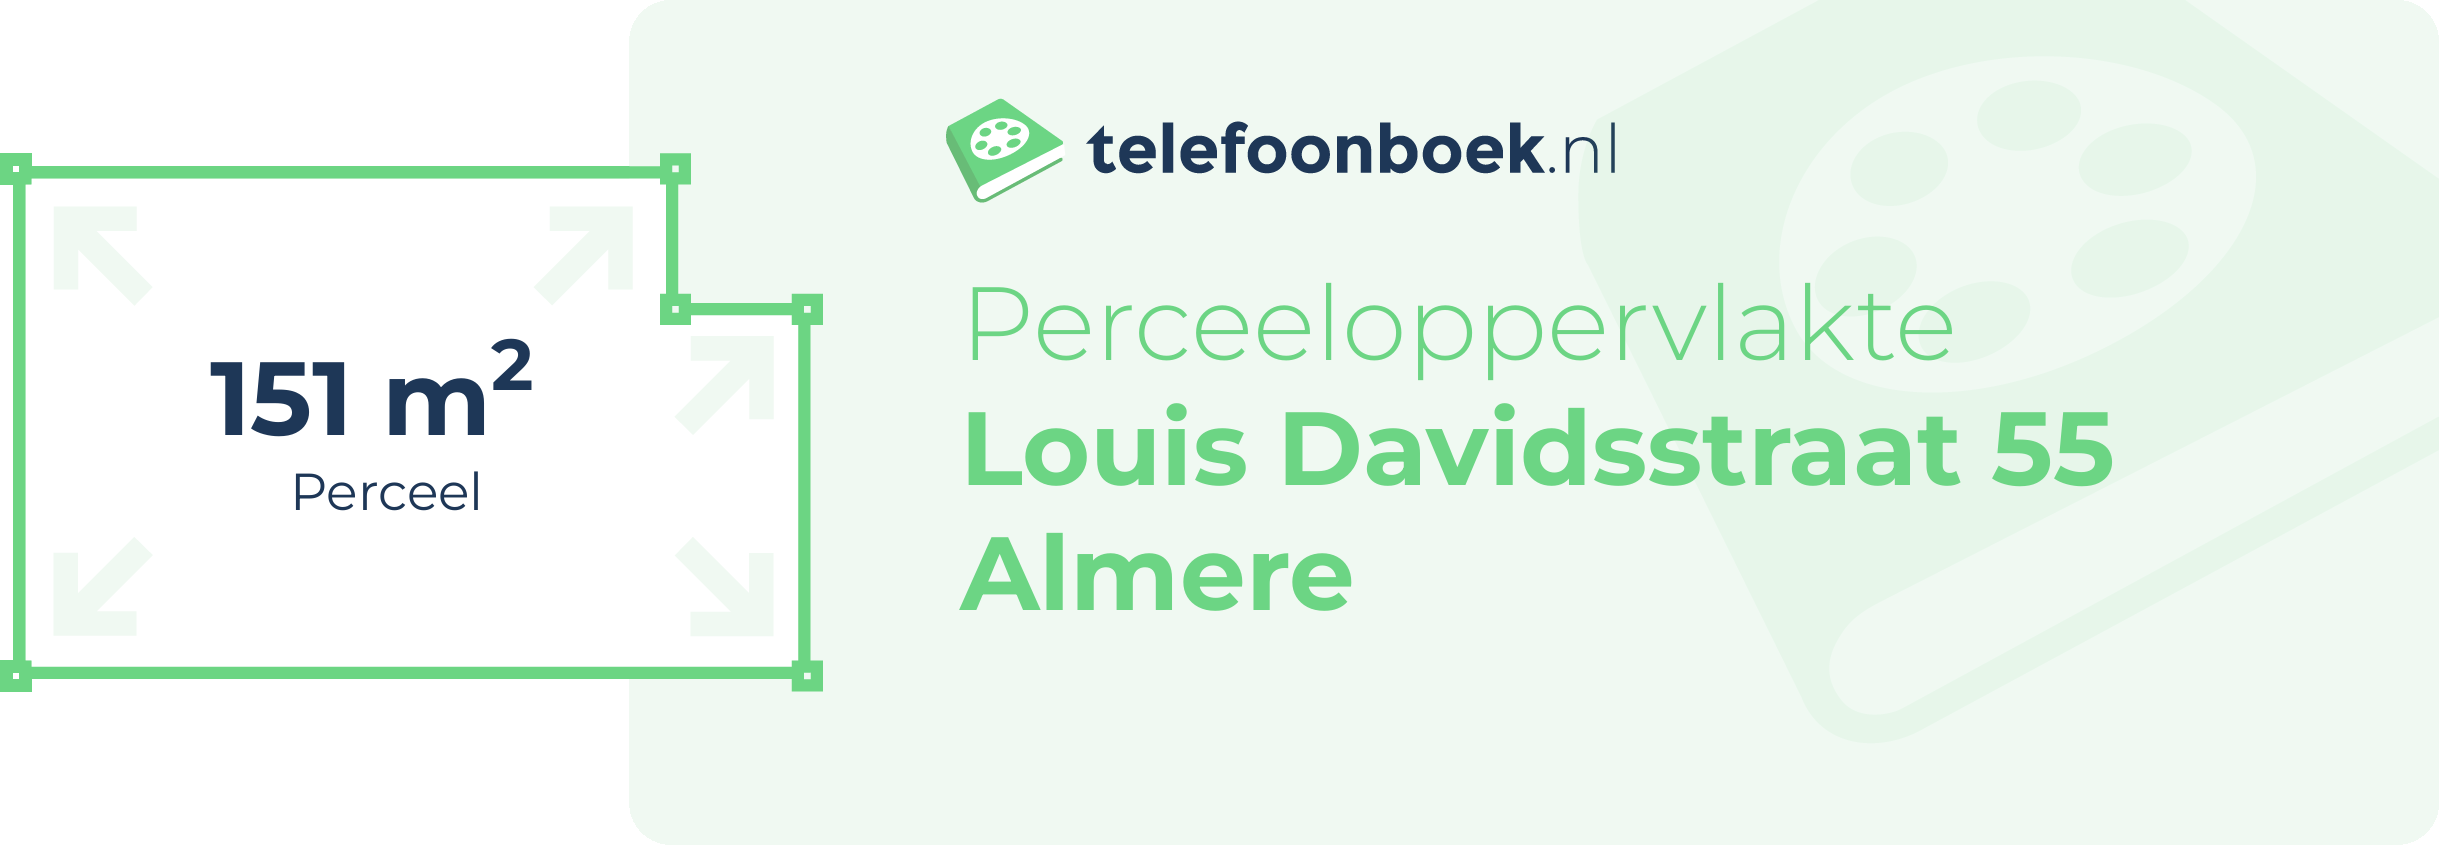 Perceeloppervlakte Louis Davidsstraat 55 Almere